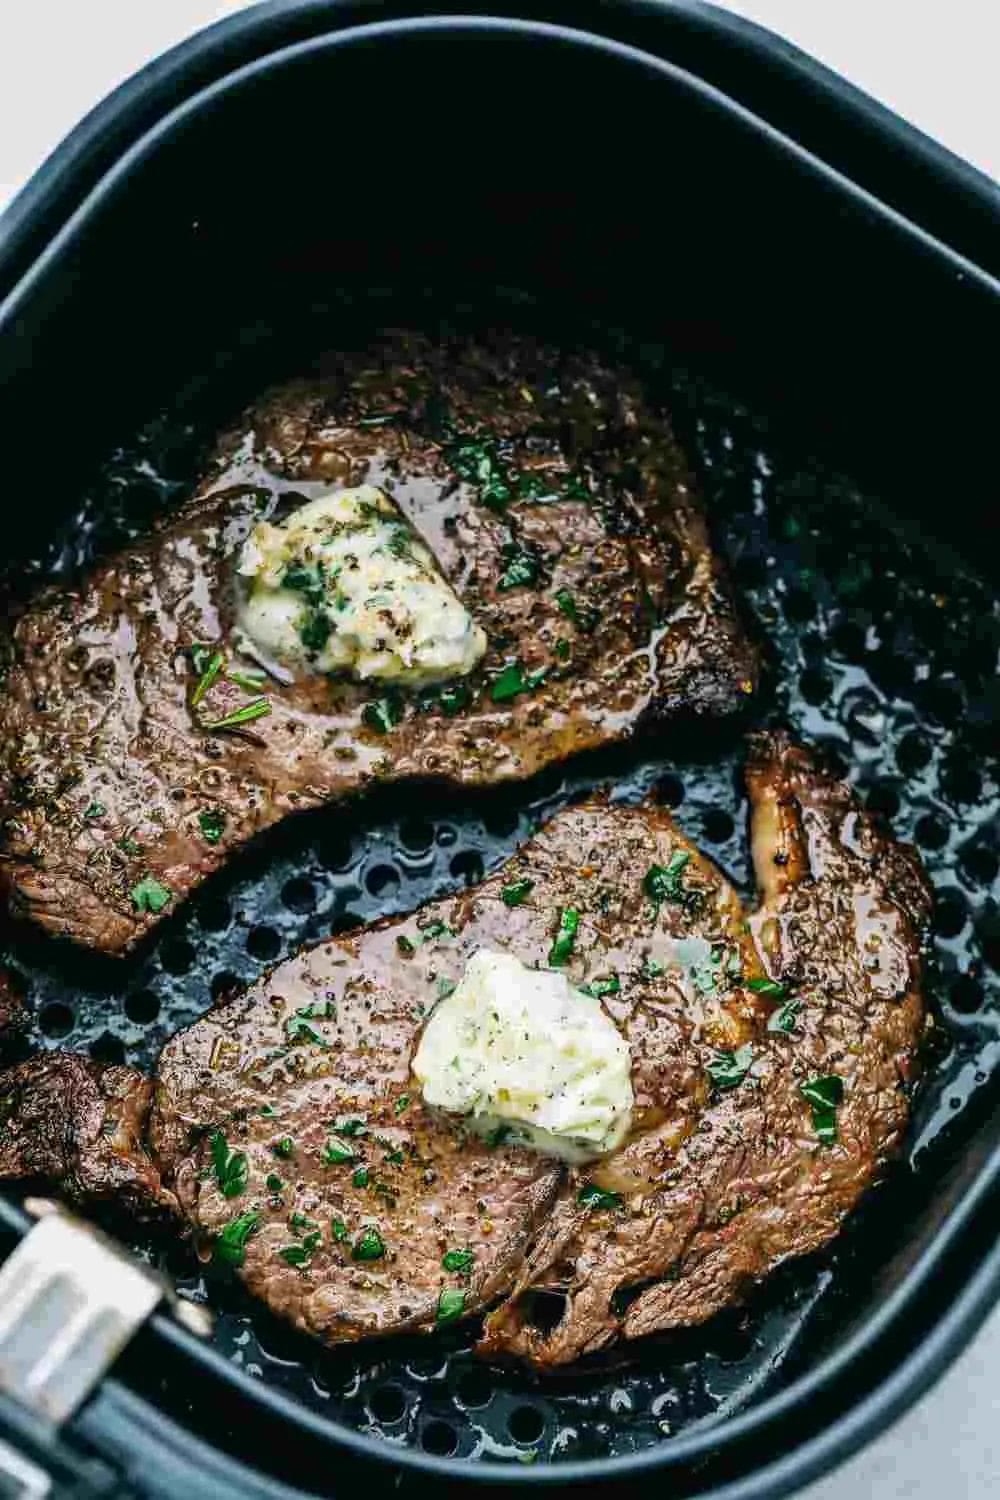 How To Cook Porterhouse Steak In An Air Fryer?